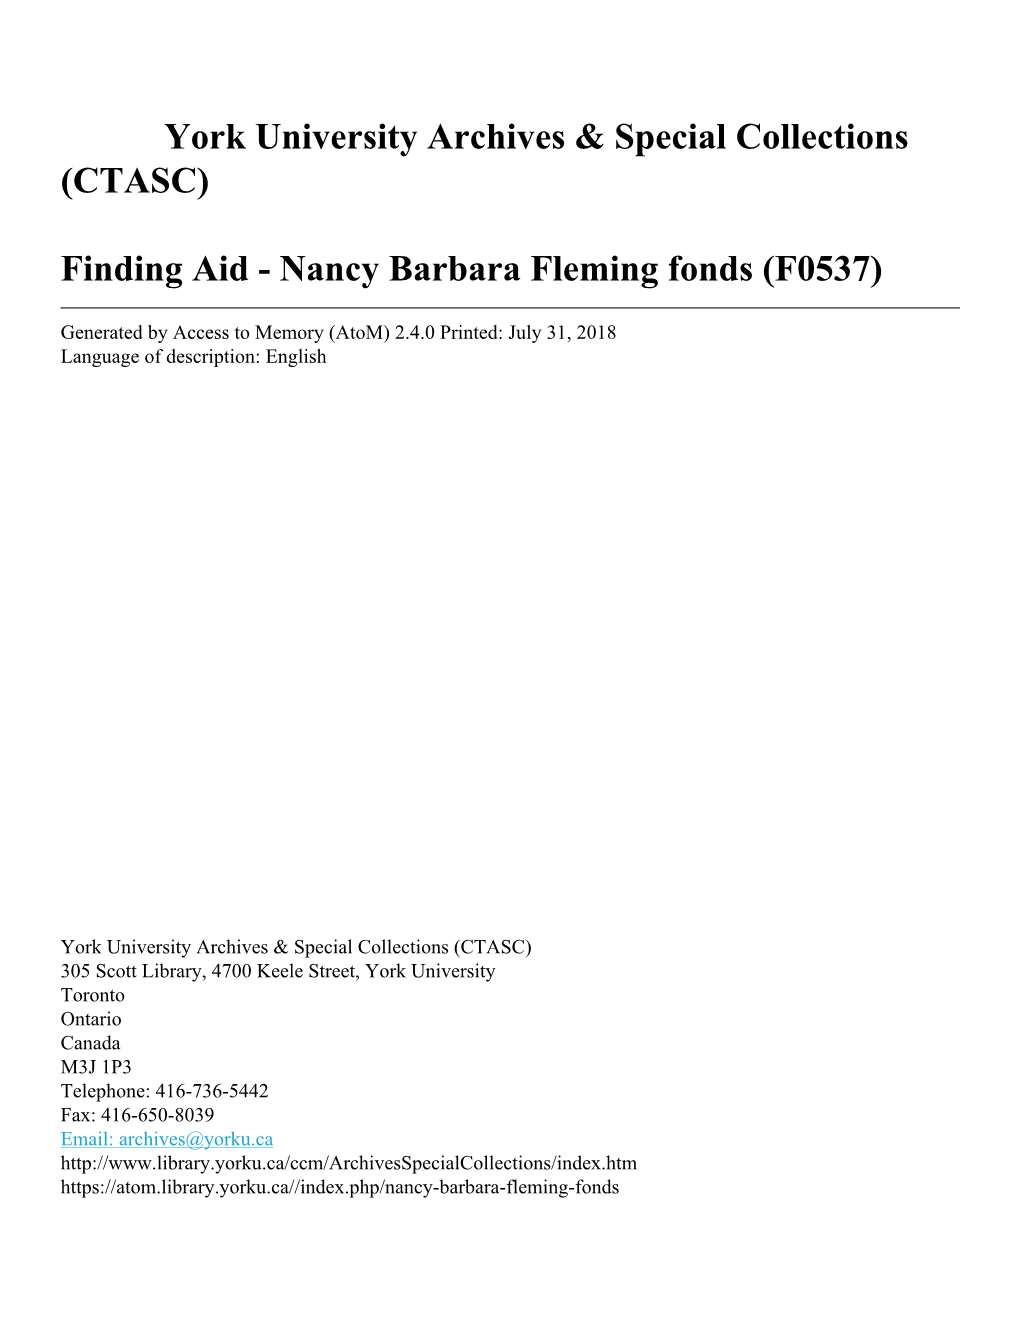 Nancy Barbara Fleming Fonds (F0537)